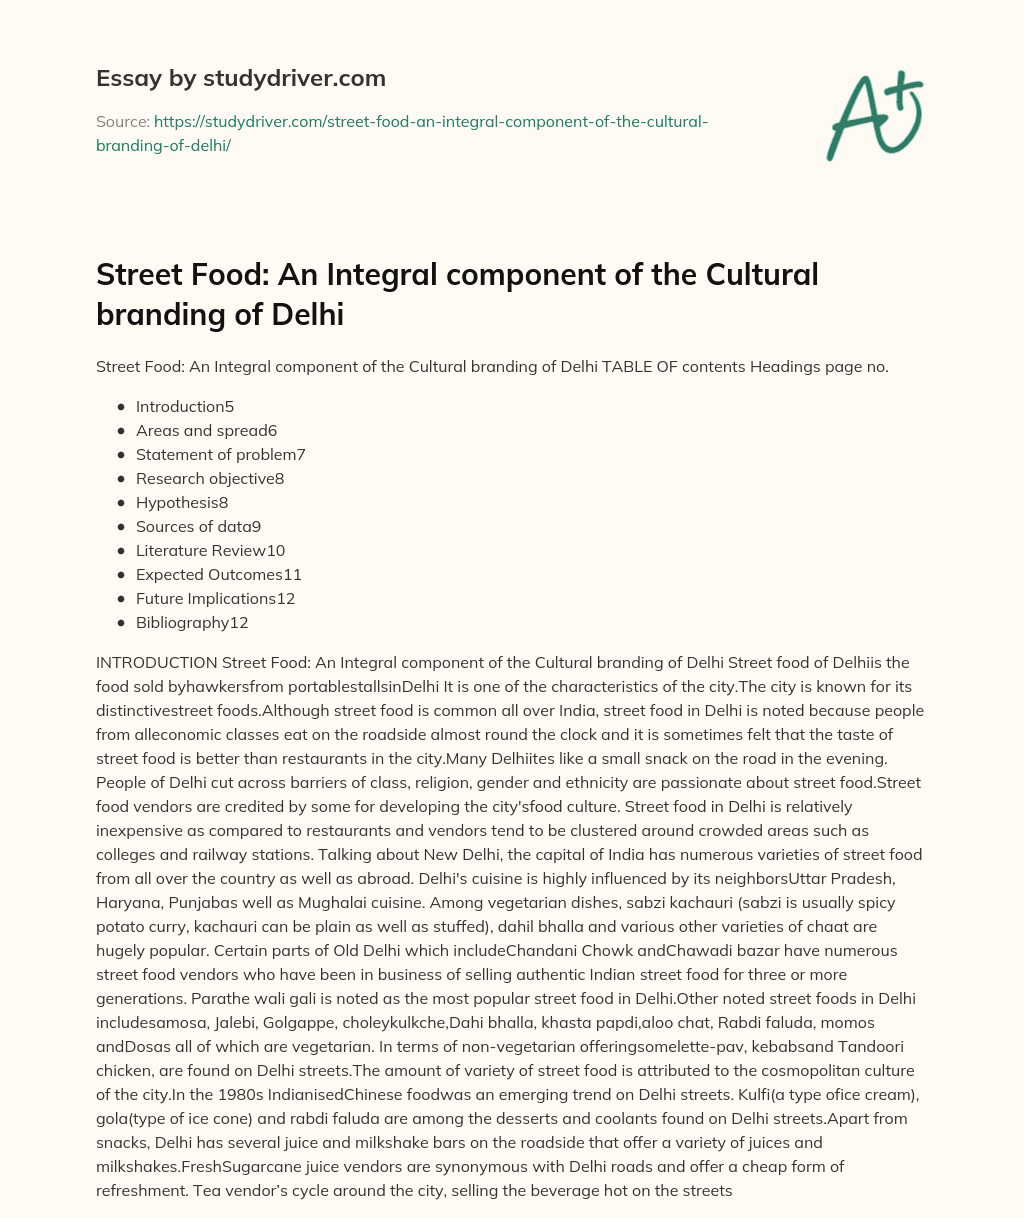 Street Food: an Integral Component of the Cultural Branding of Delhi essay